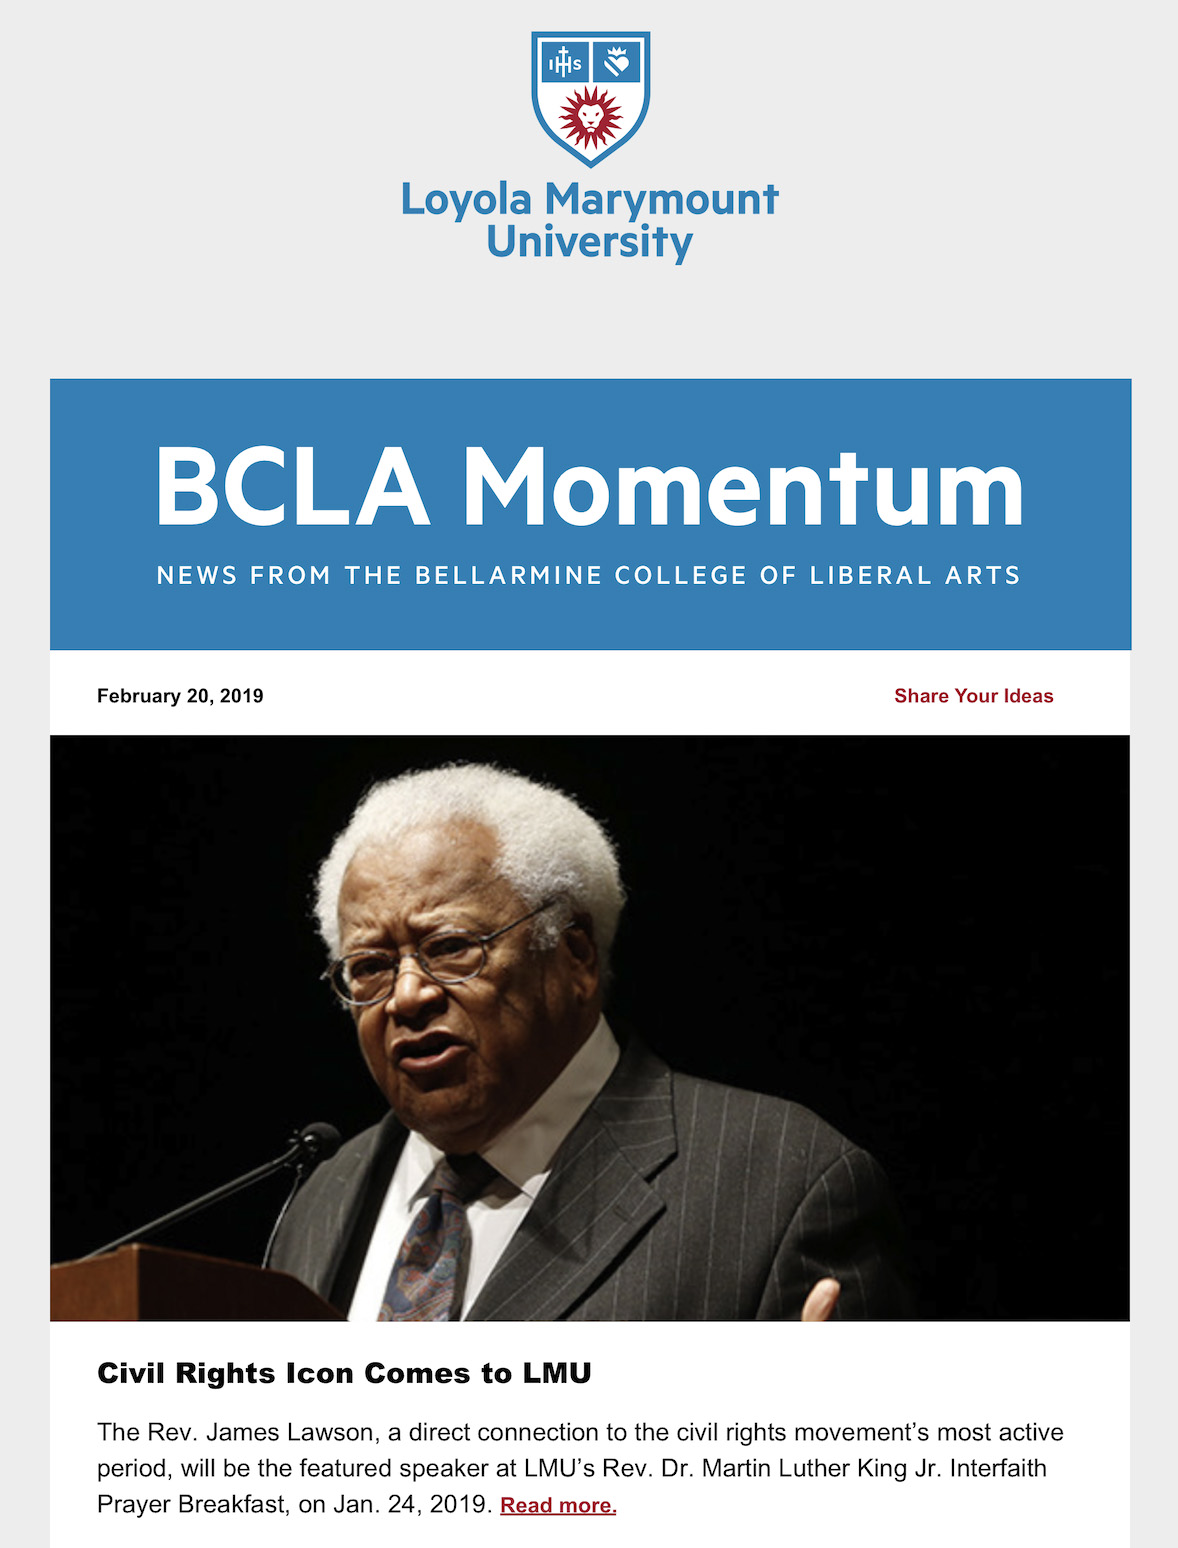 BCLA Momentum newsletter feature